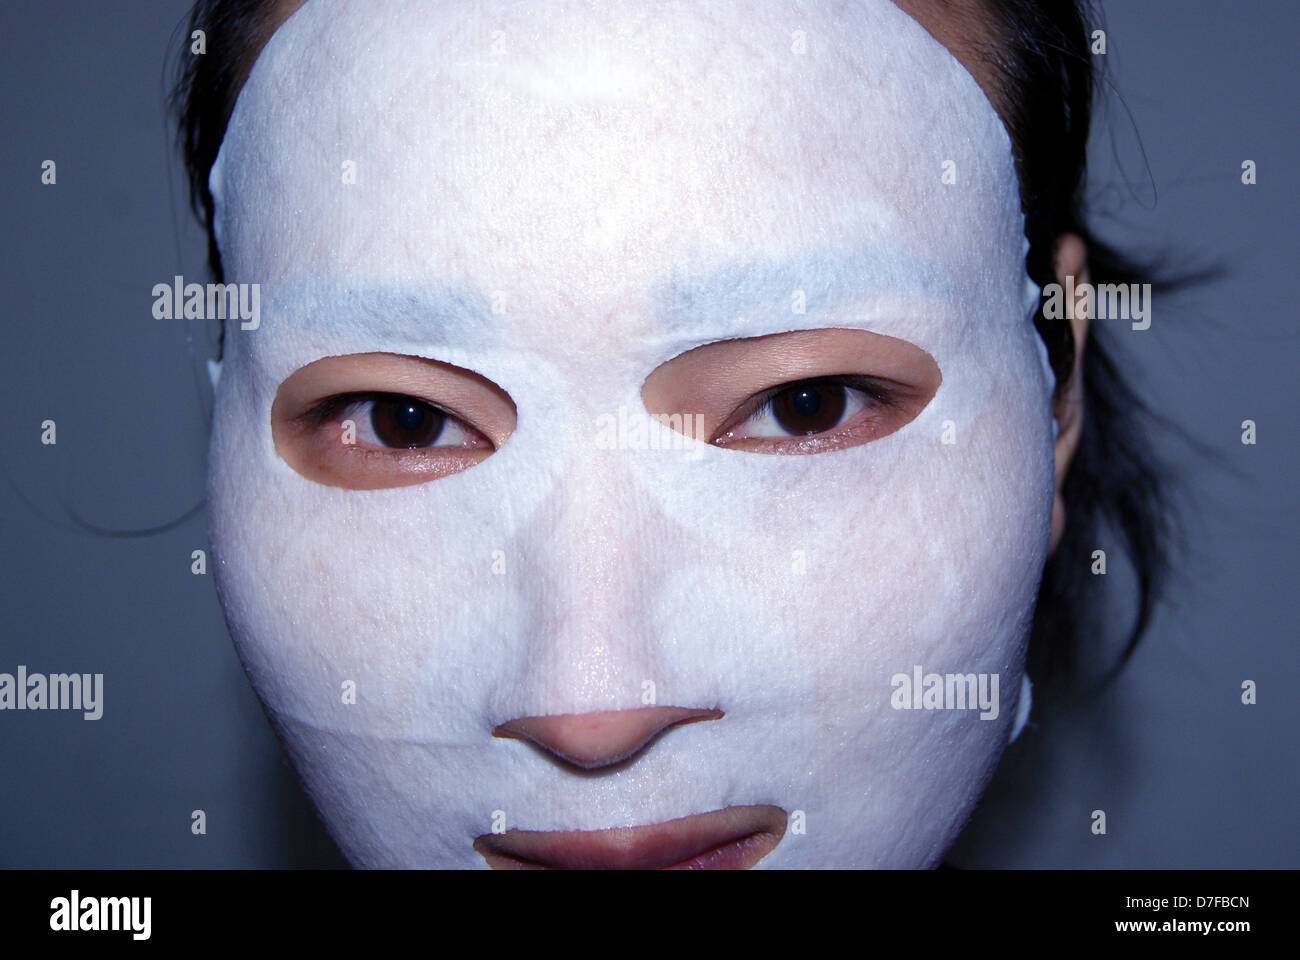 Asian woman with facial mask Stock Photo